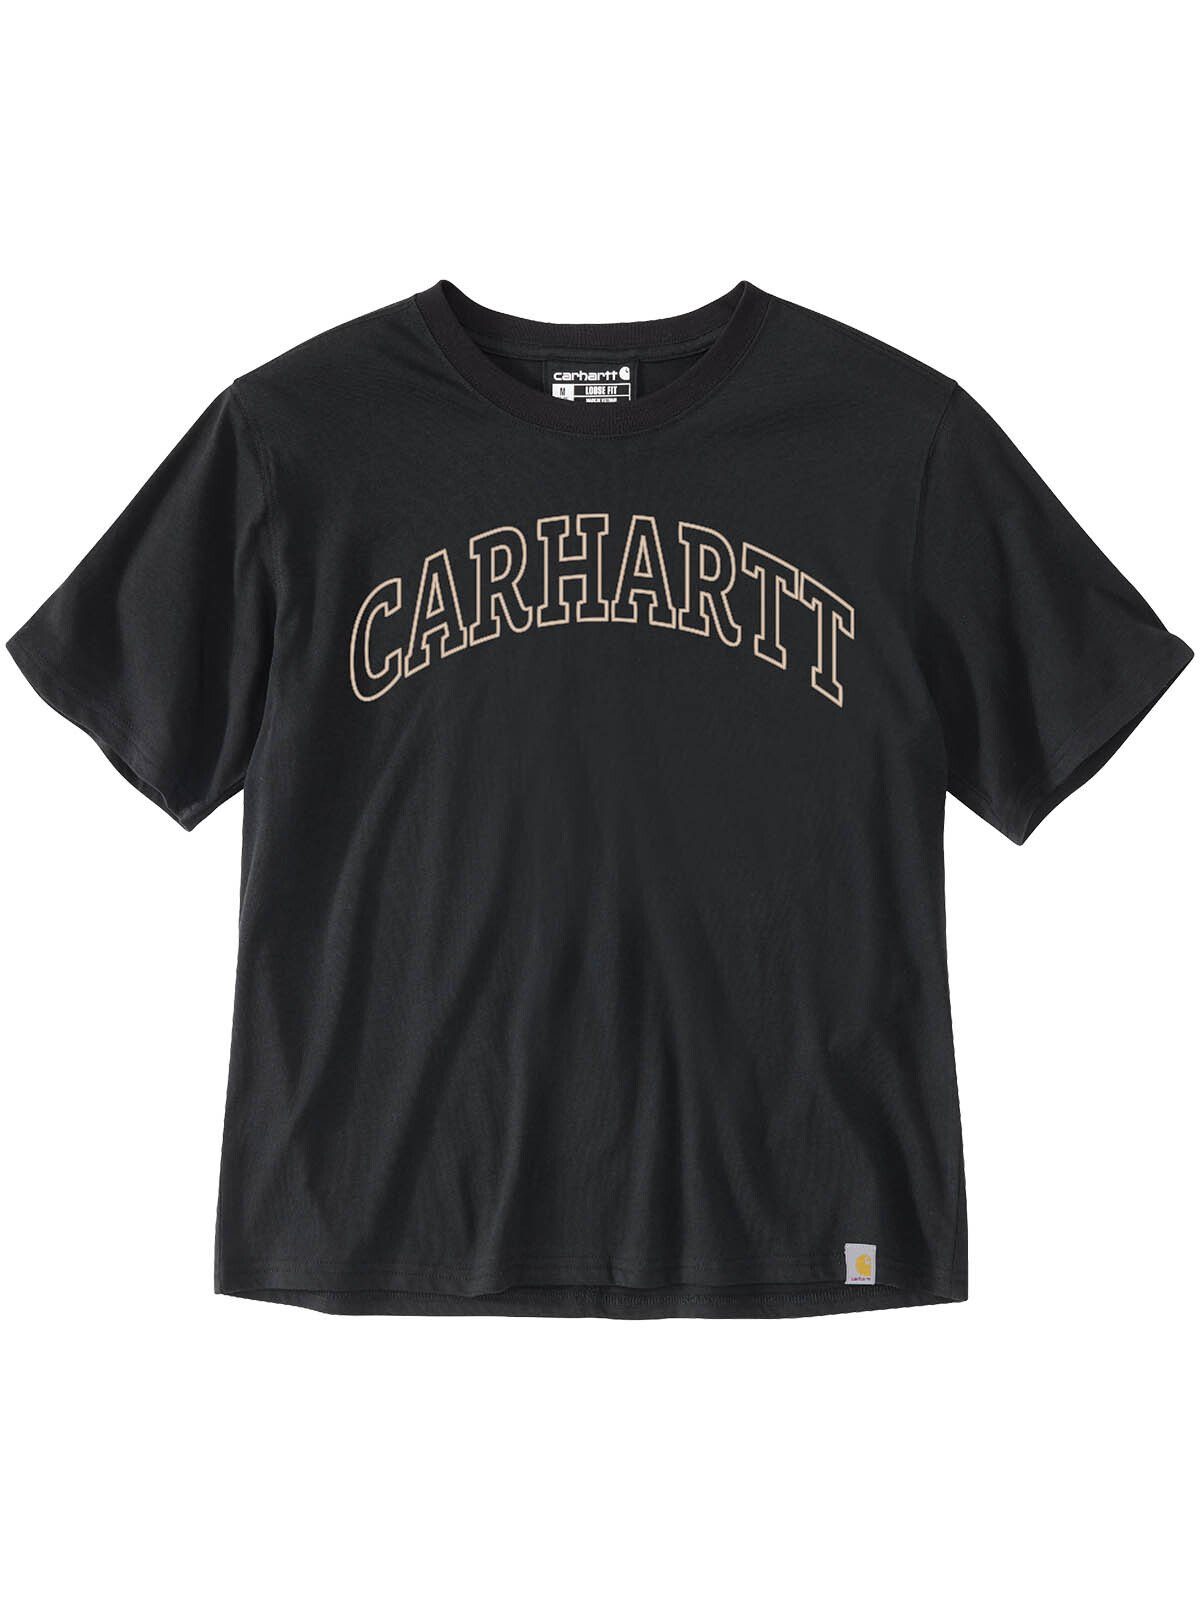 Carhartt T-Shirt 106186-N04 Carhartt Graphic